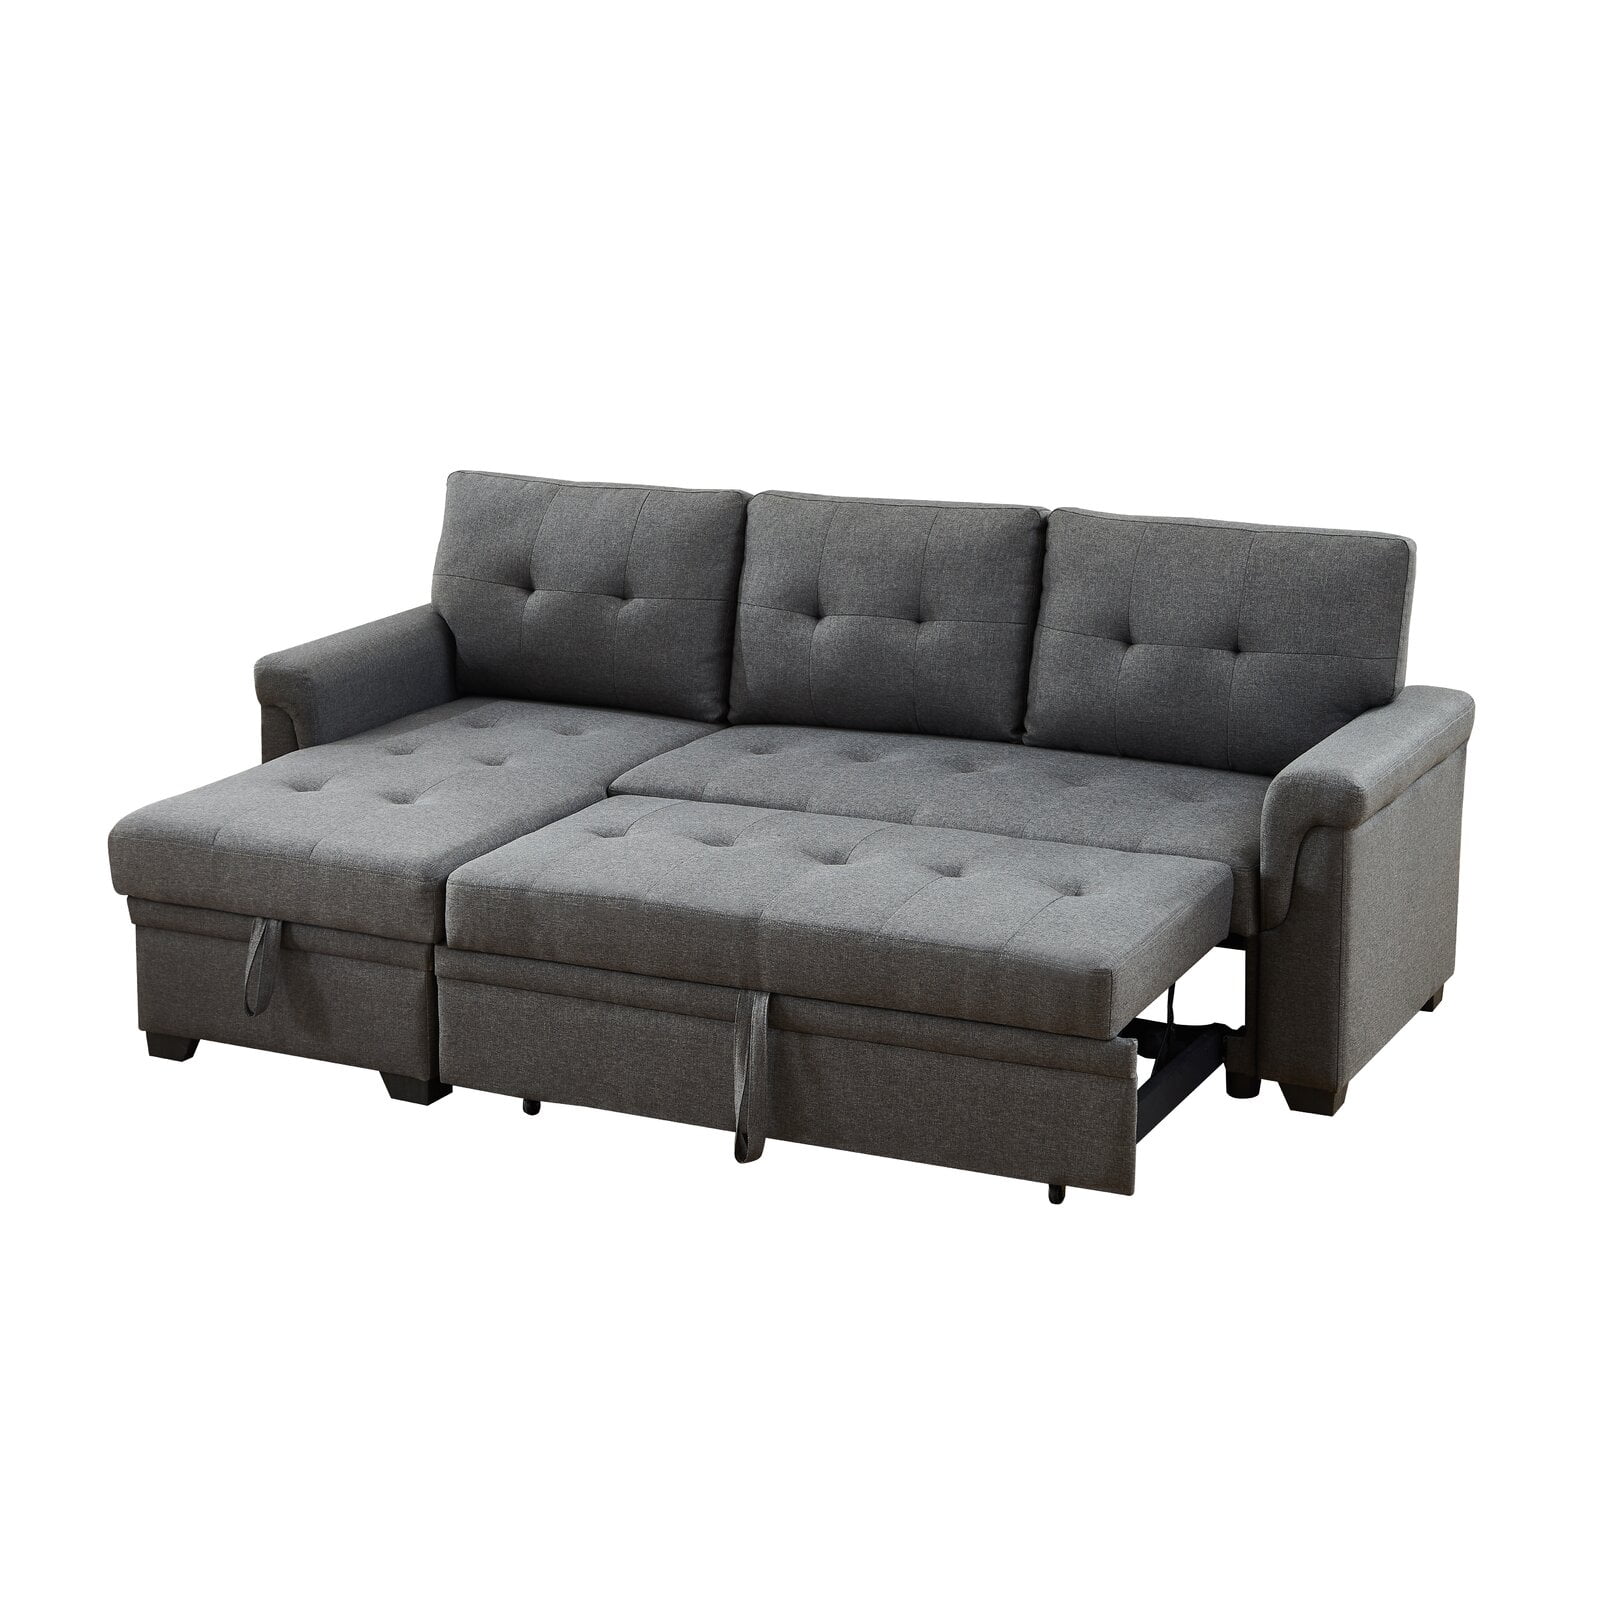 84 Wide Reversible Sleeper Sofa